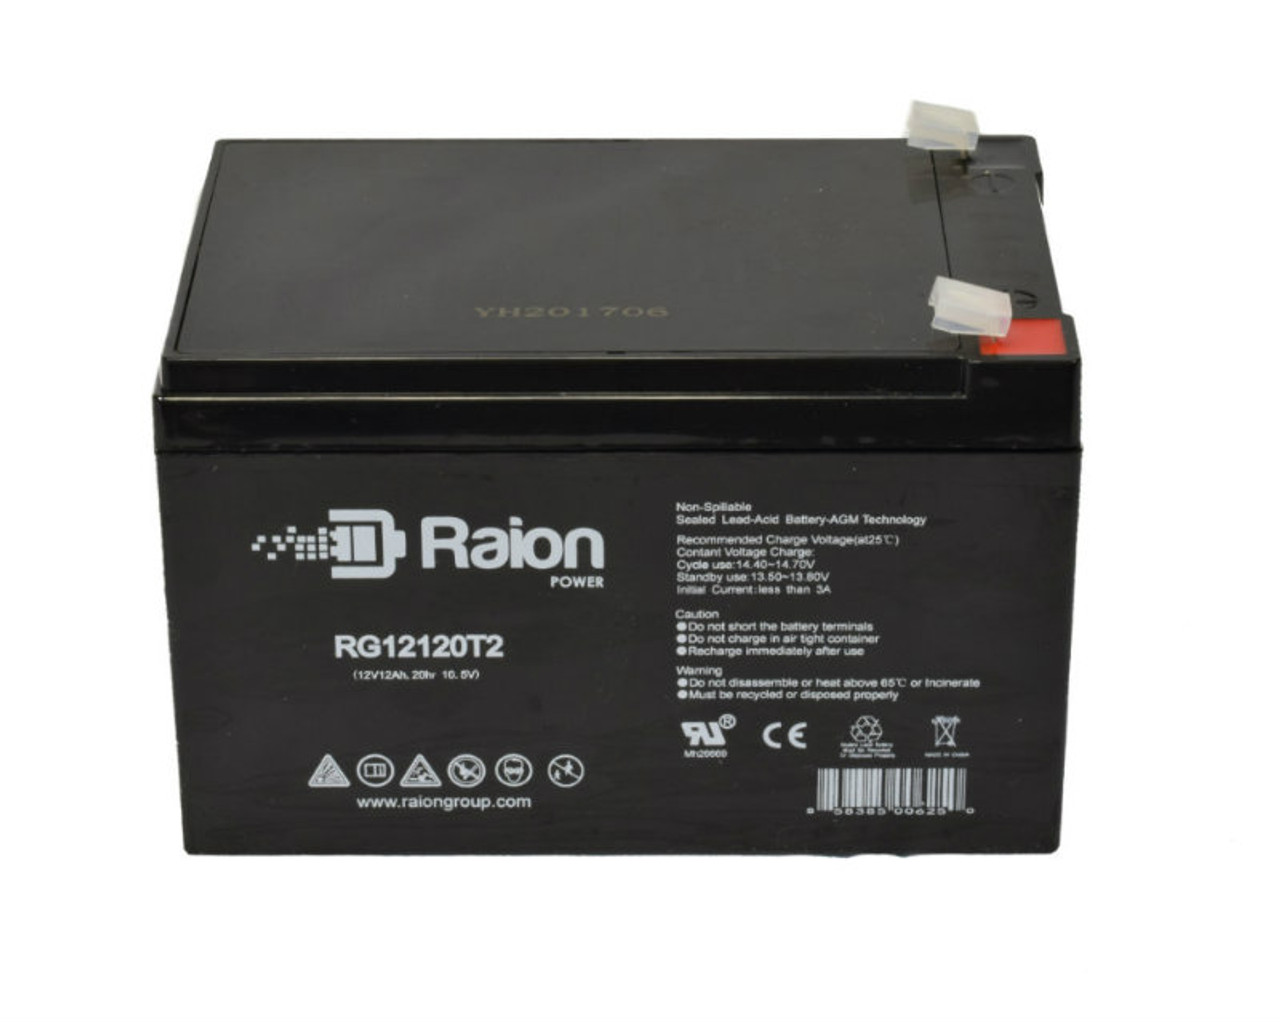 Raion Power RG12120T2 SLA Battery for Union MX-12120